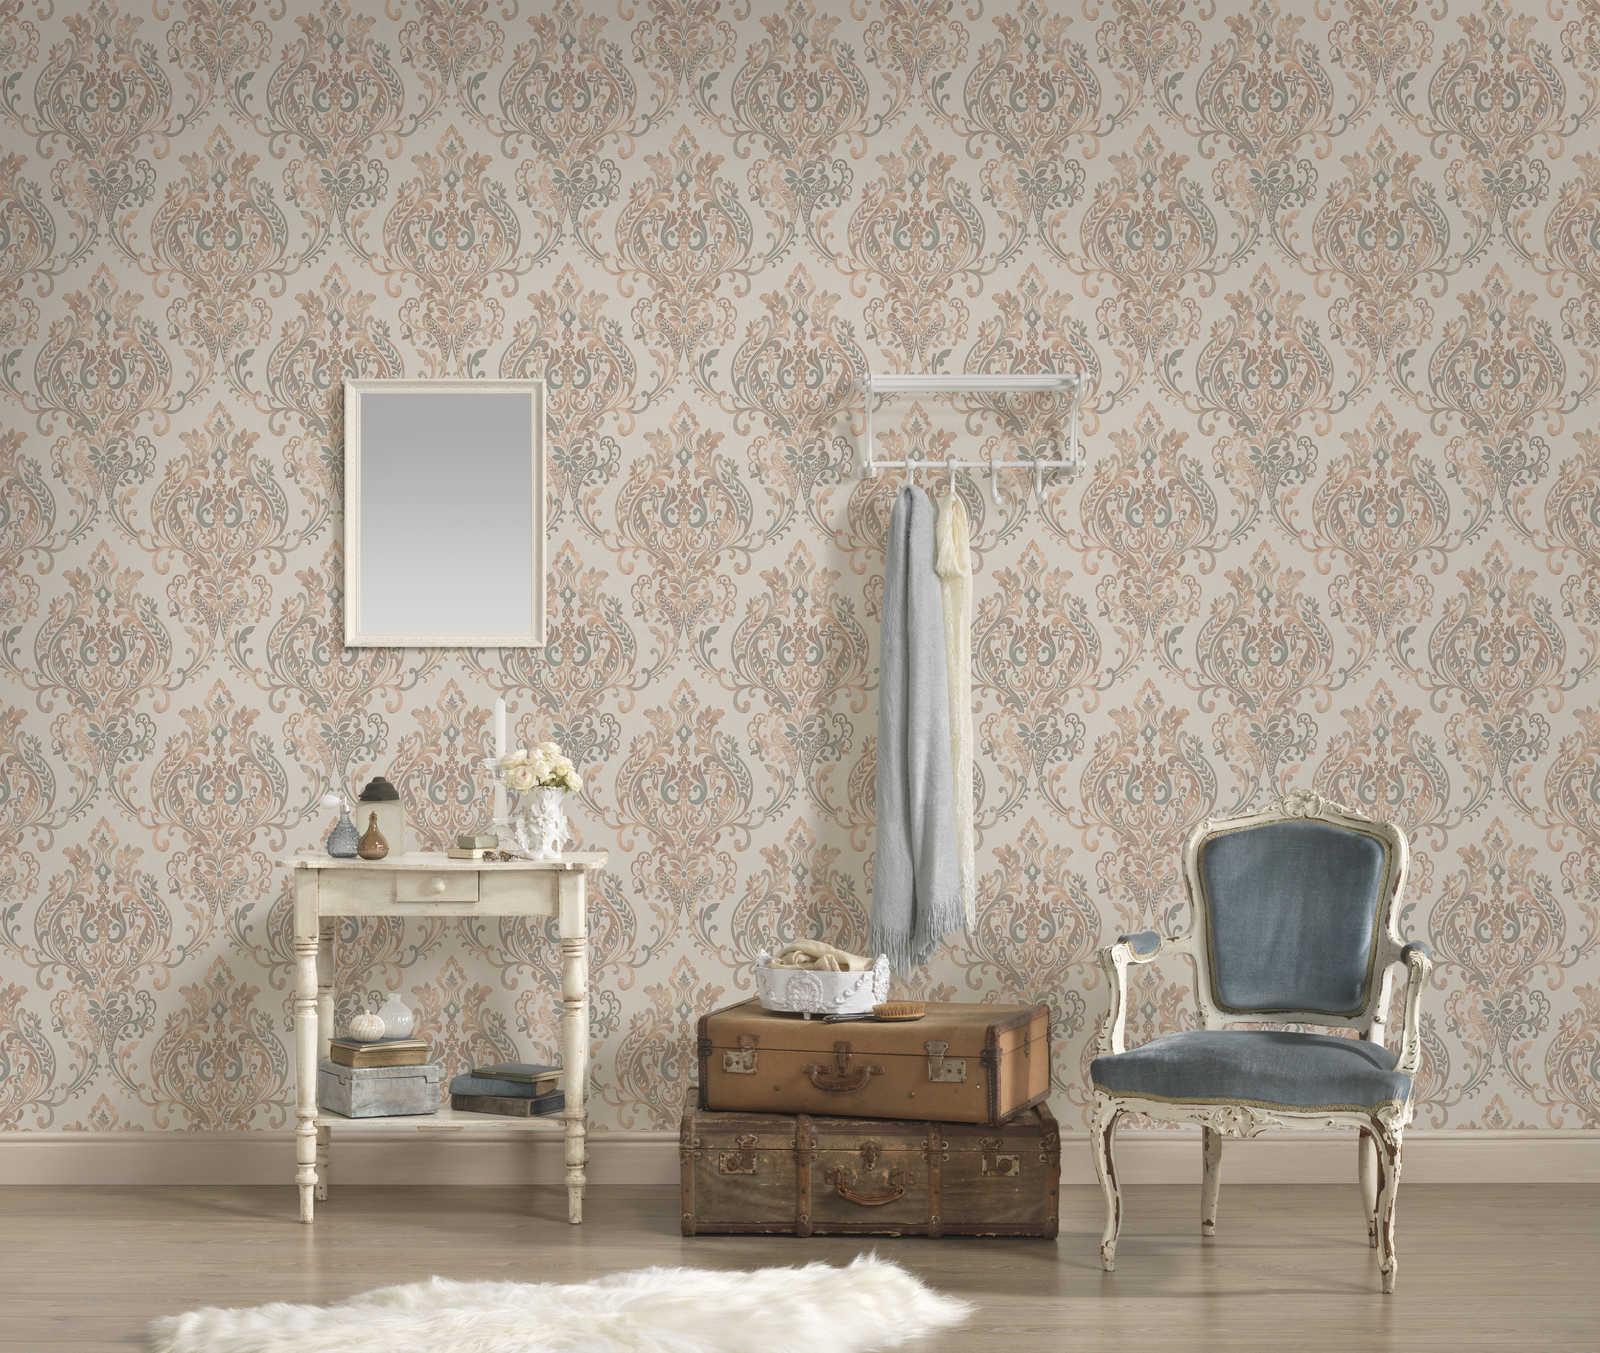             Self-adhesive wallpaper | ornament pattern with metallic effect - beige, cream
        